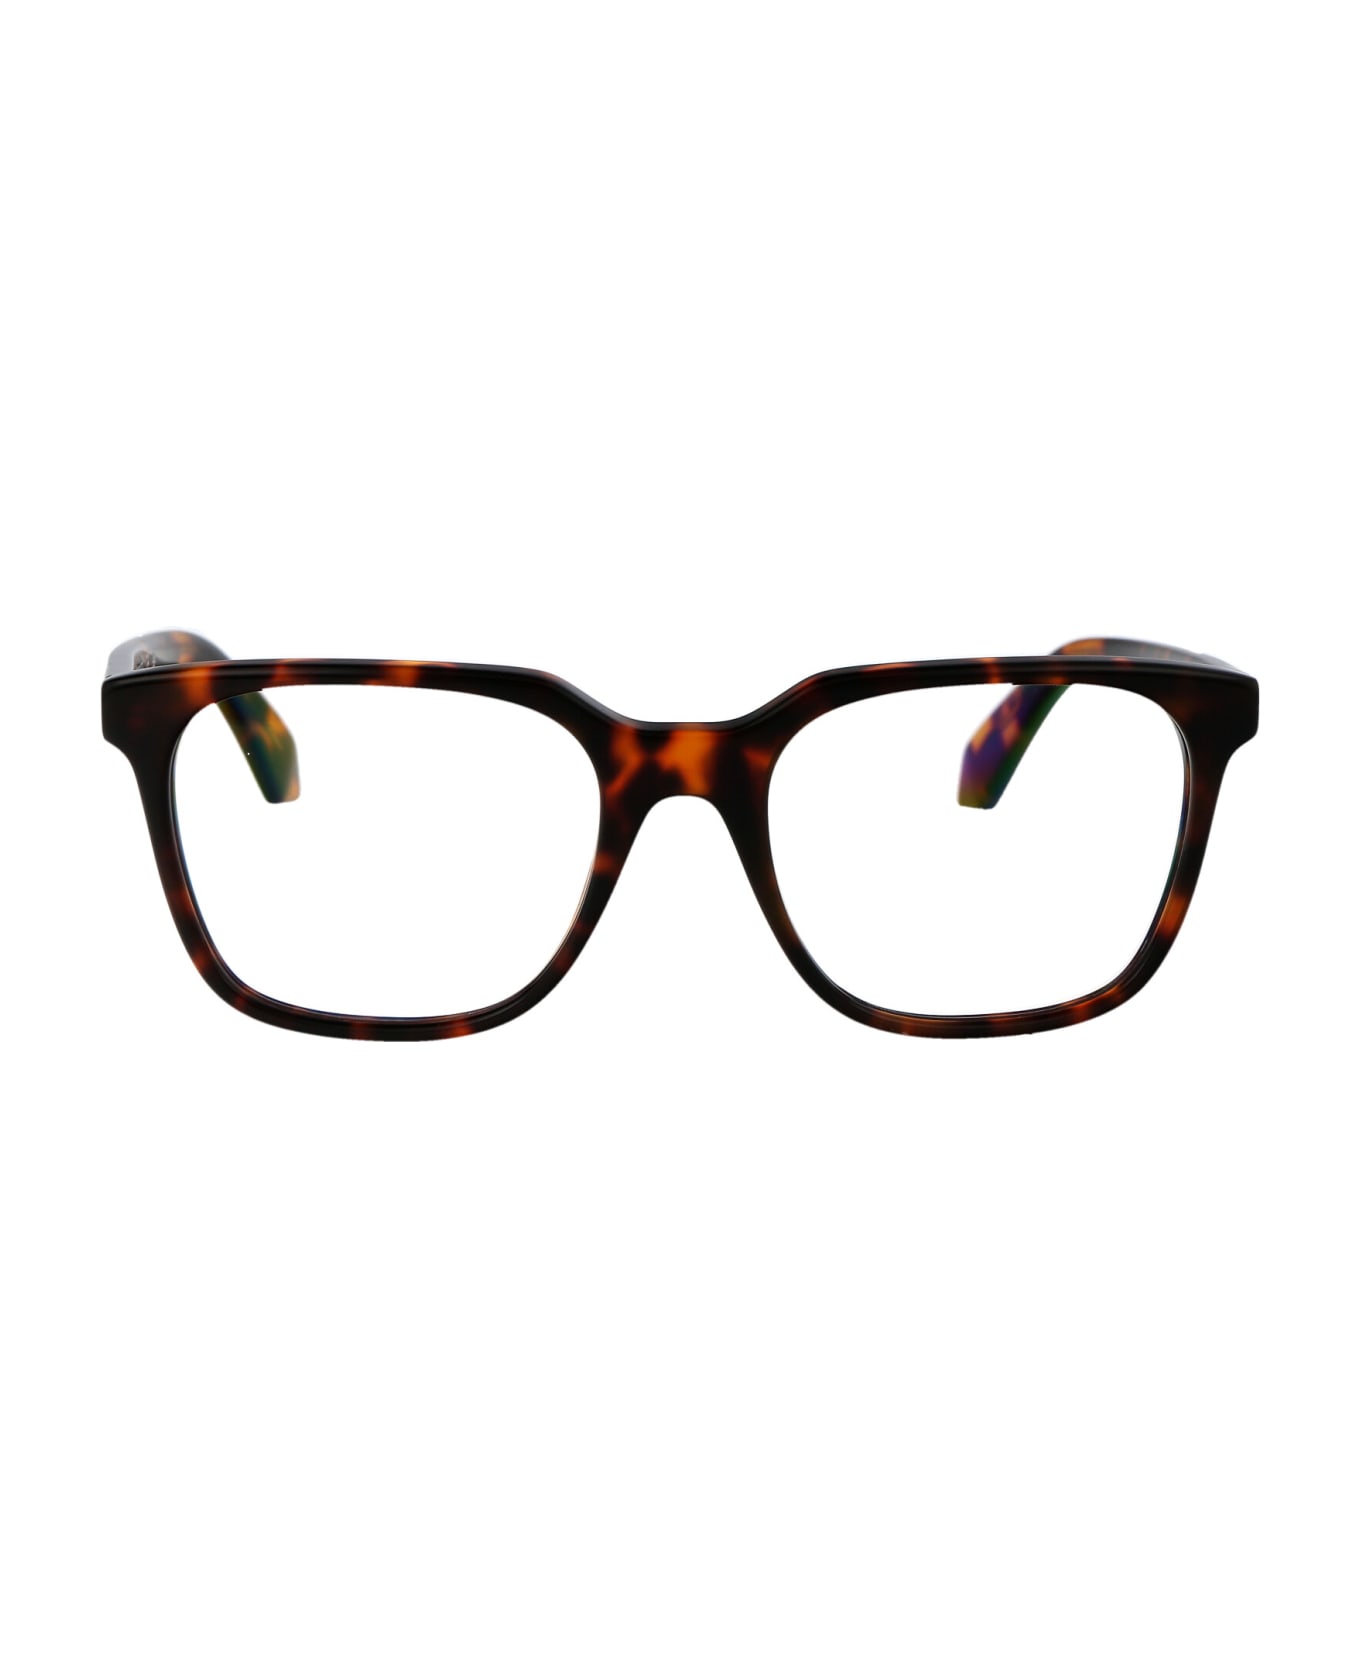 Off-White Optical Style 38 Glasses - 6000 HAVANA